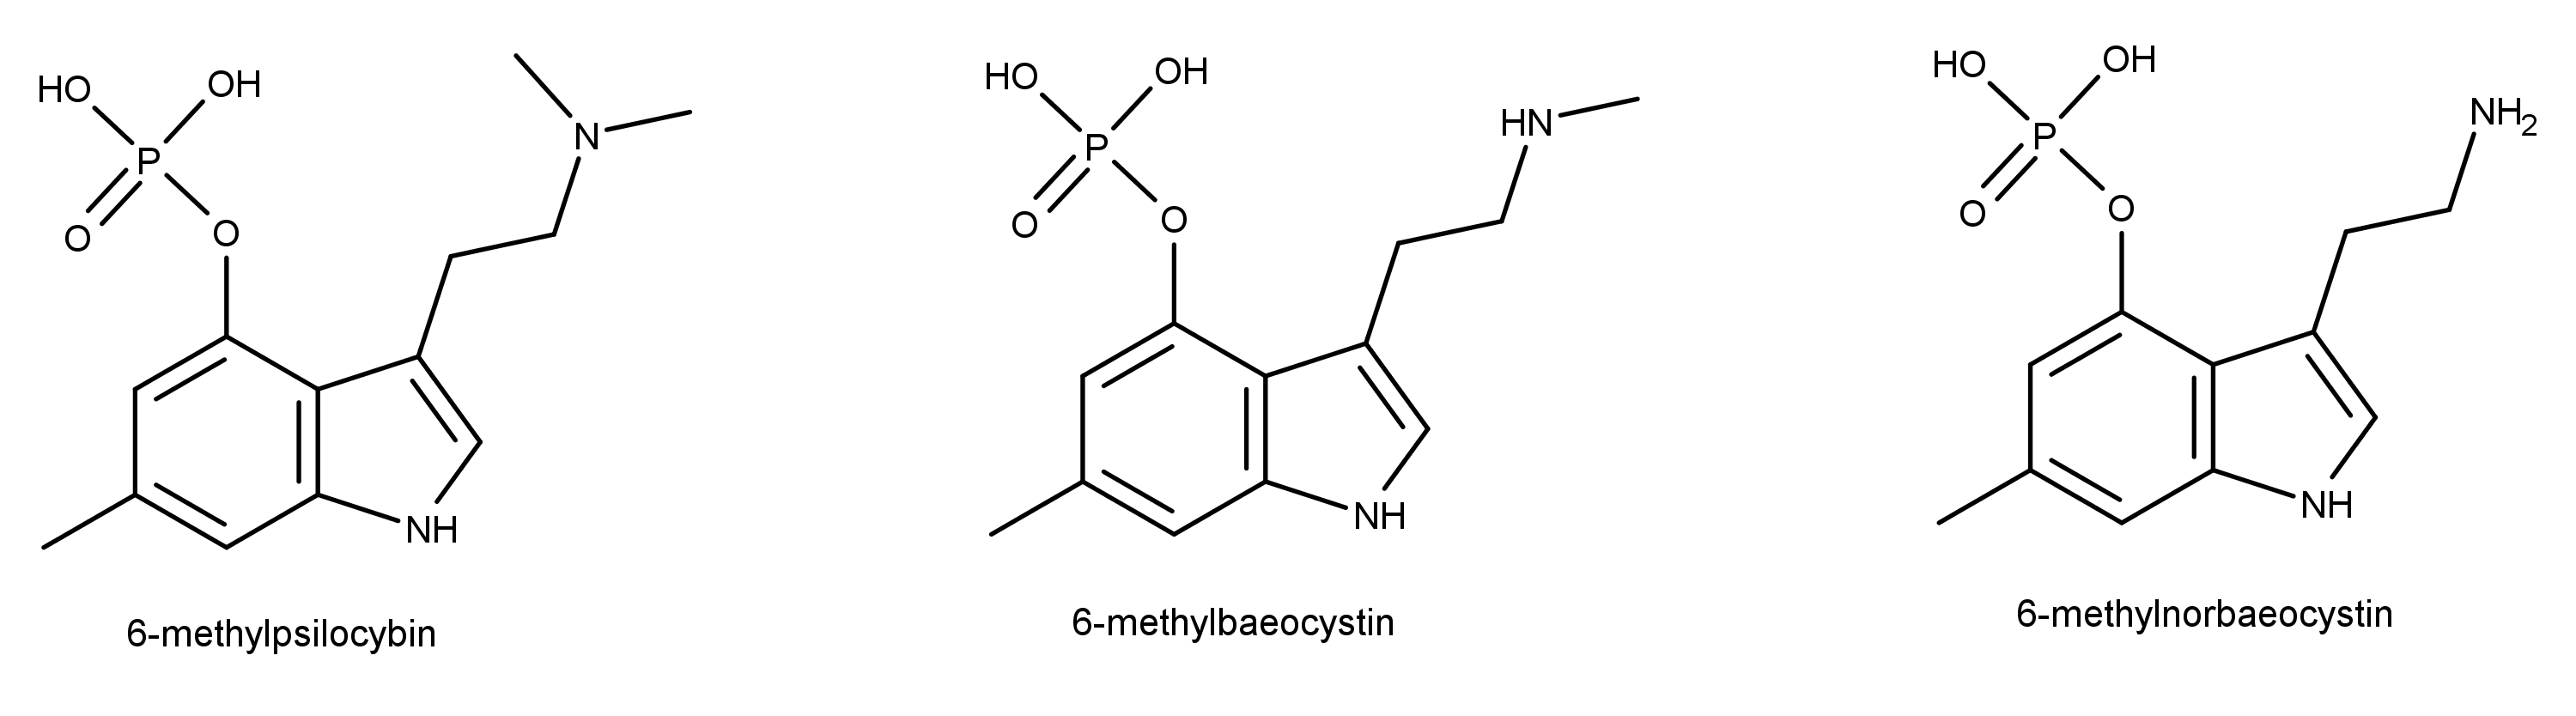 3000-6-methylated-congeners.png